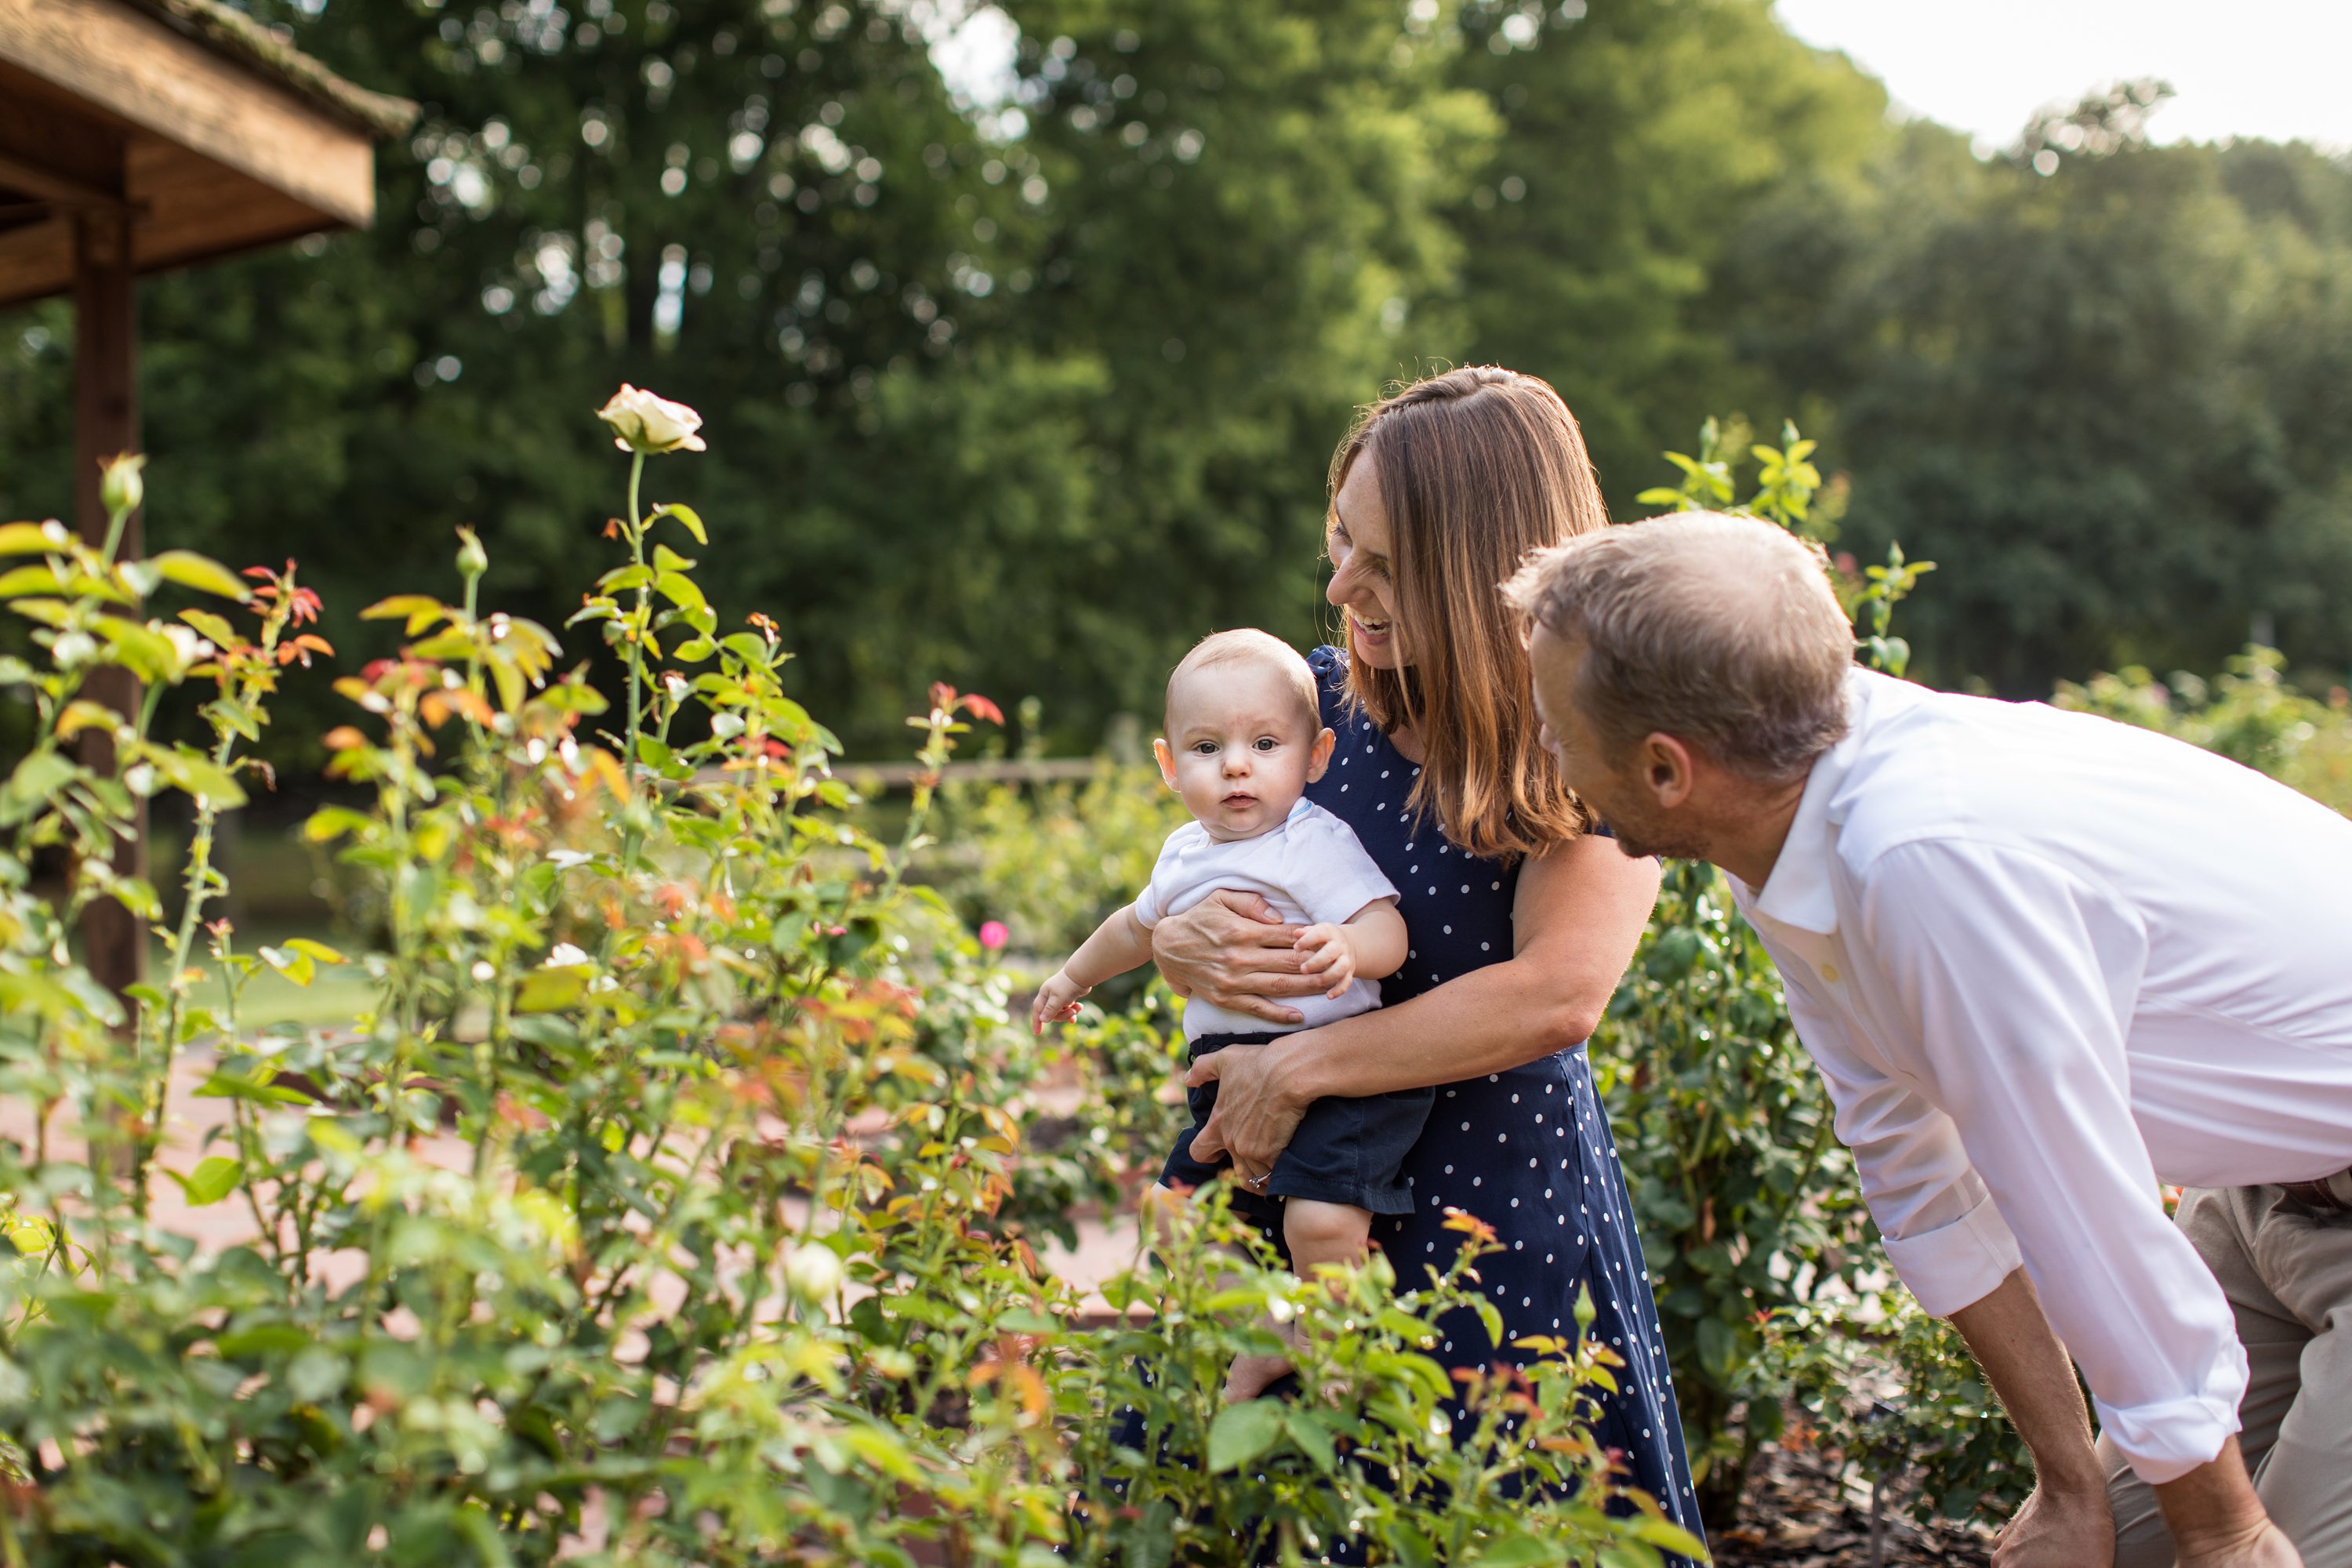 garden baby photos,Chapel Hill,gene stroud rose garden park,family in garden,baby in garden